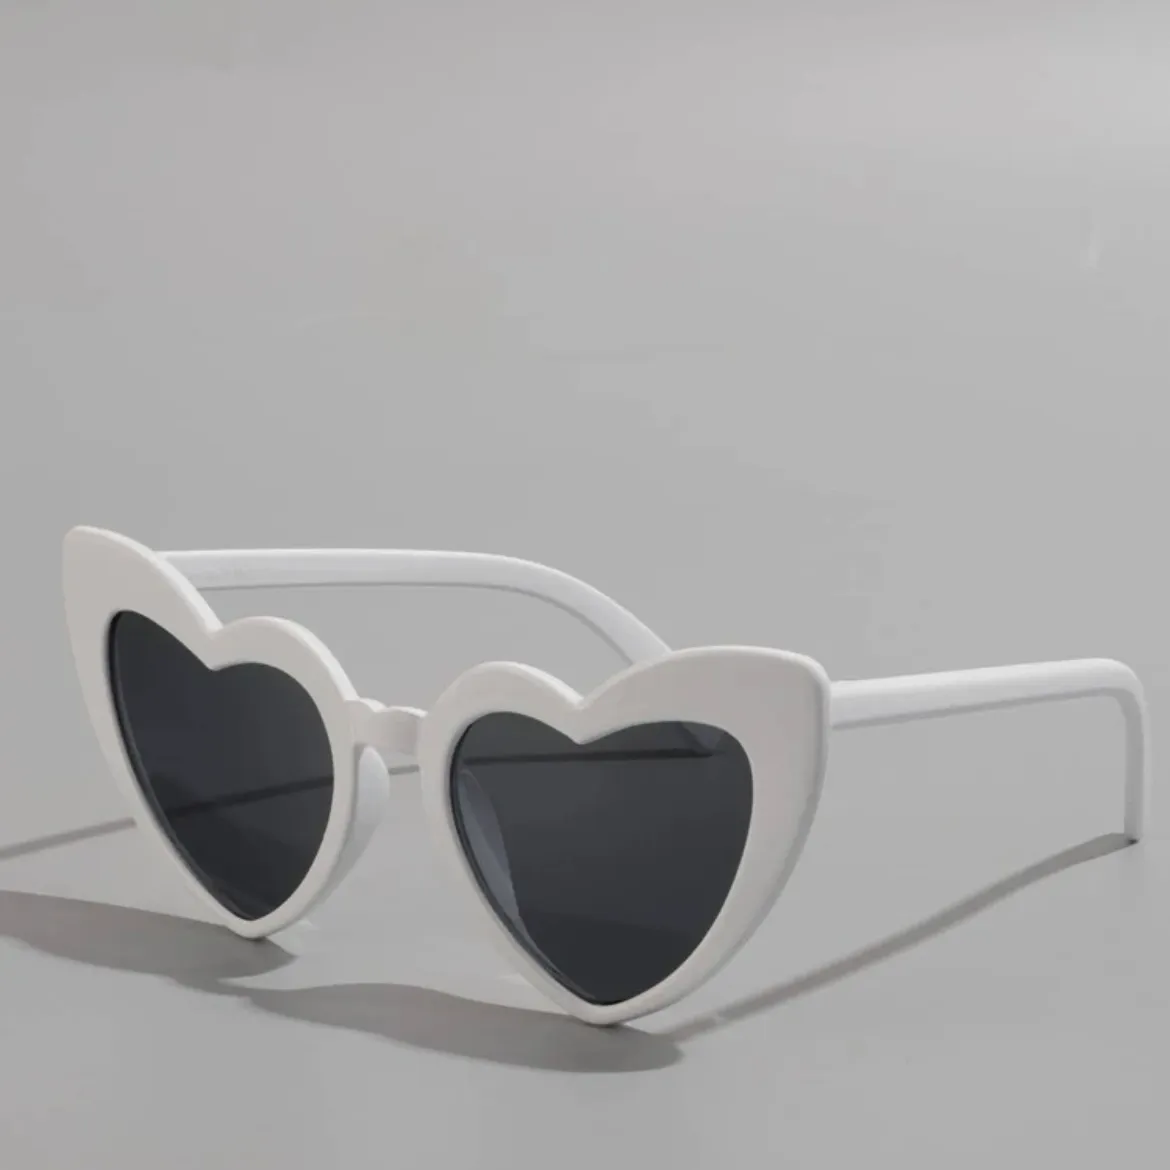 Heart shaped sunglasses photo 1